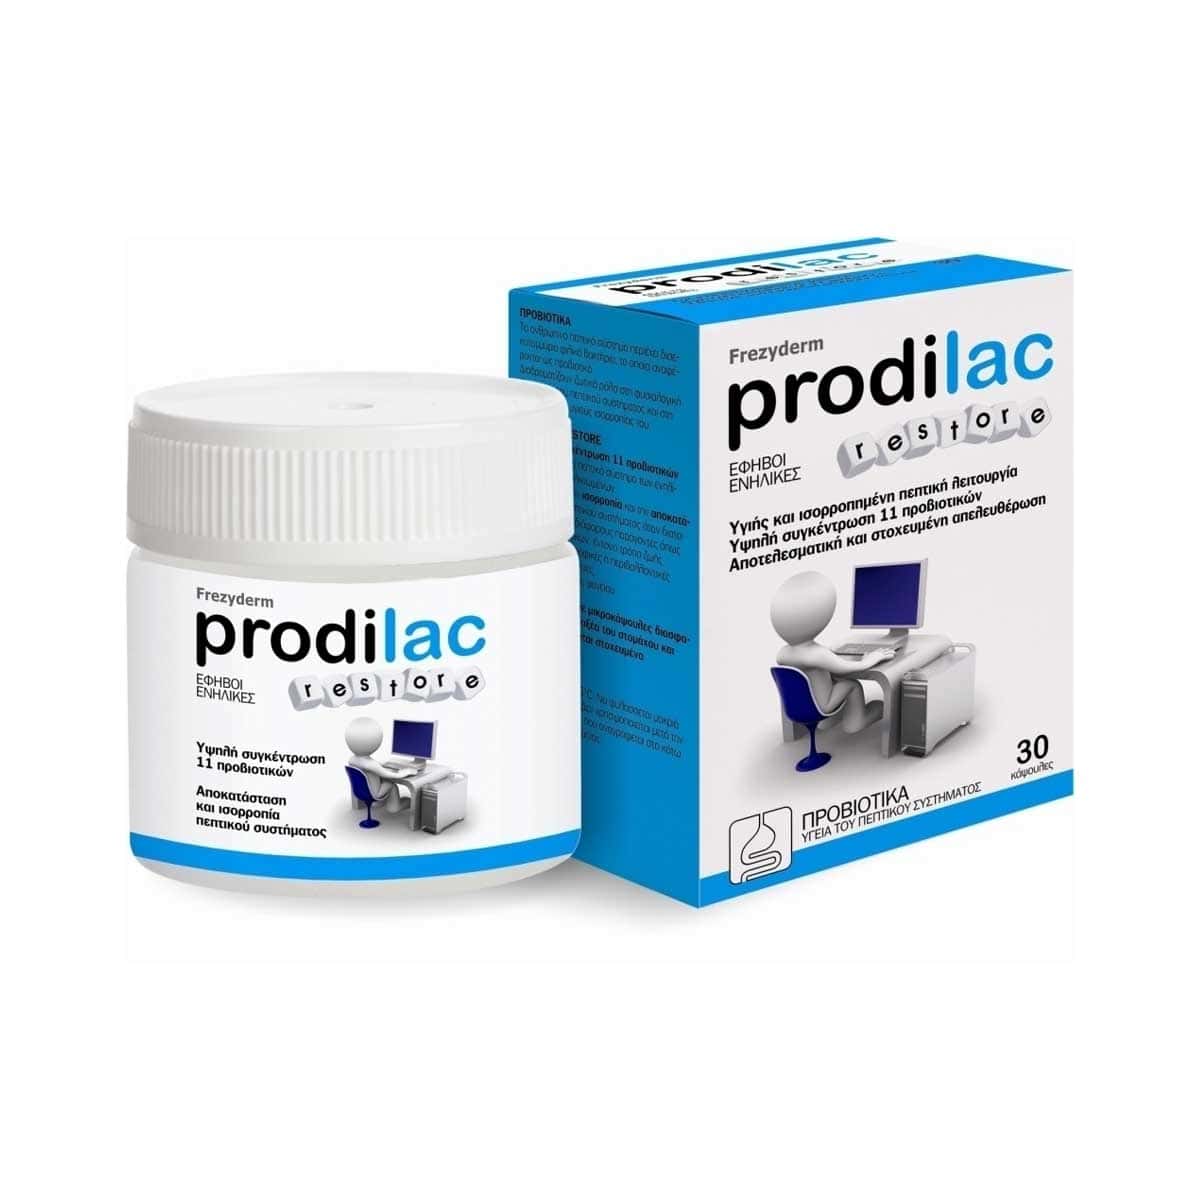 Frezyderm-Prodilac-Restore-Probiotika-30-Kapsoules-5202888105517